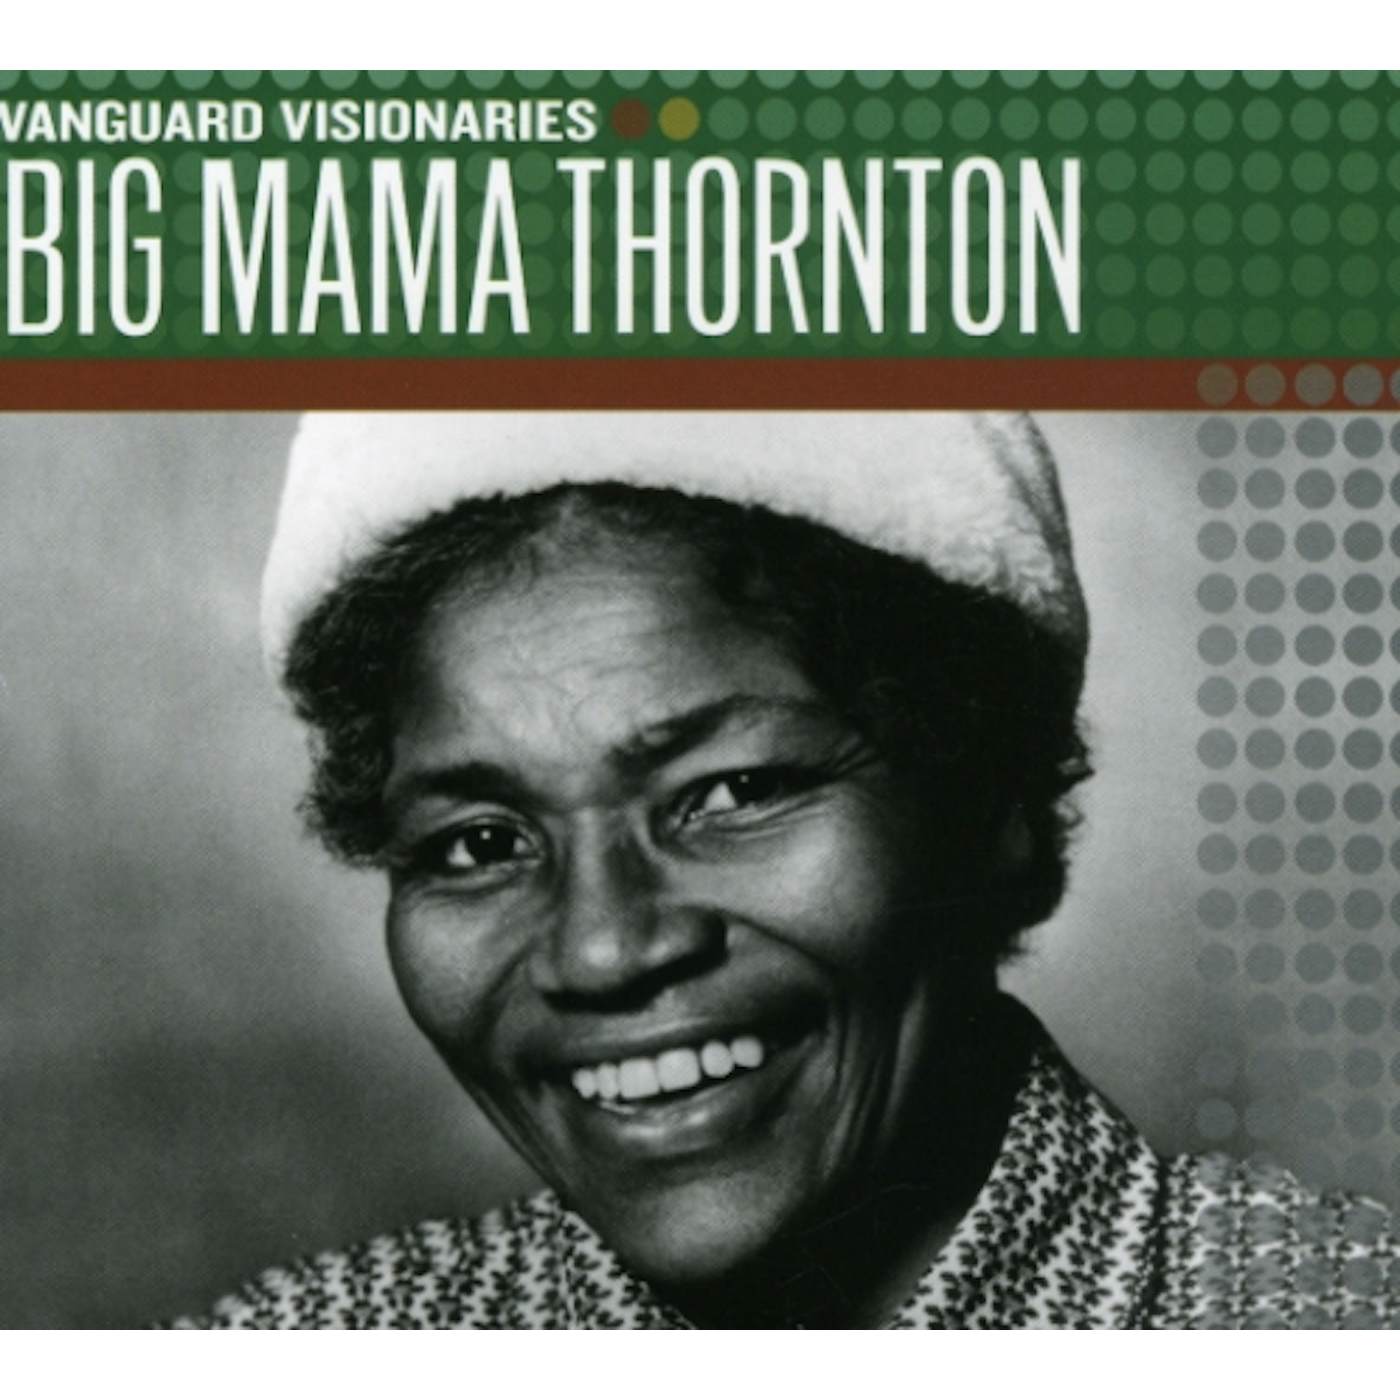 Big Mama Thornton VANGUARD VISIONARIES CD